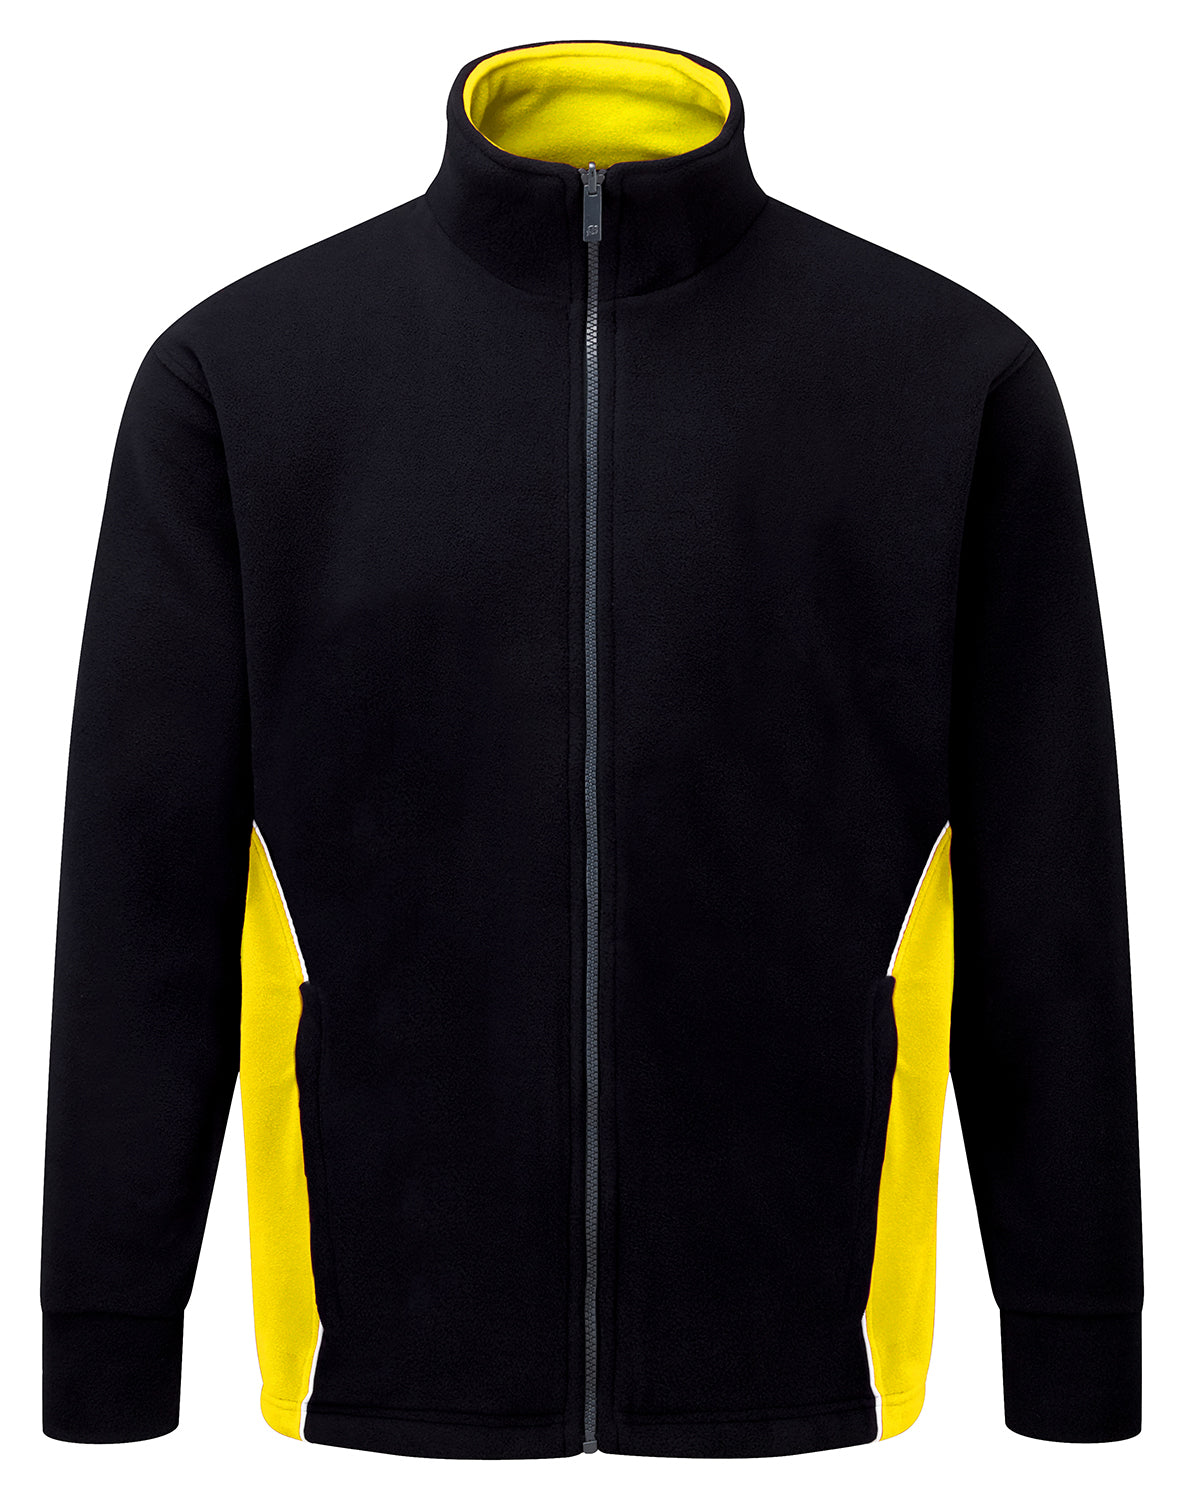 ORN Silverswift Two-Tone Workwear Fleece - Black/Yellow